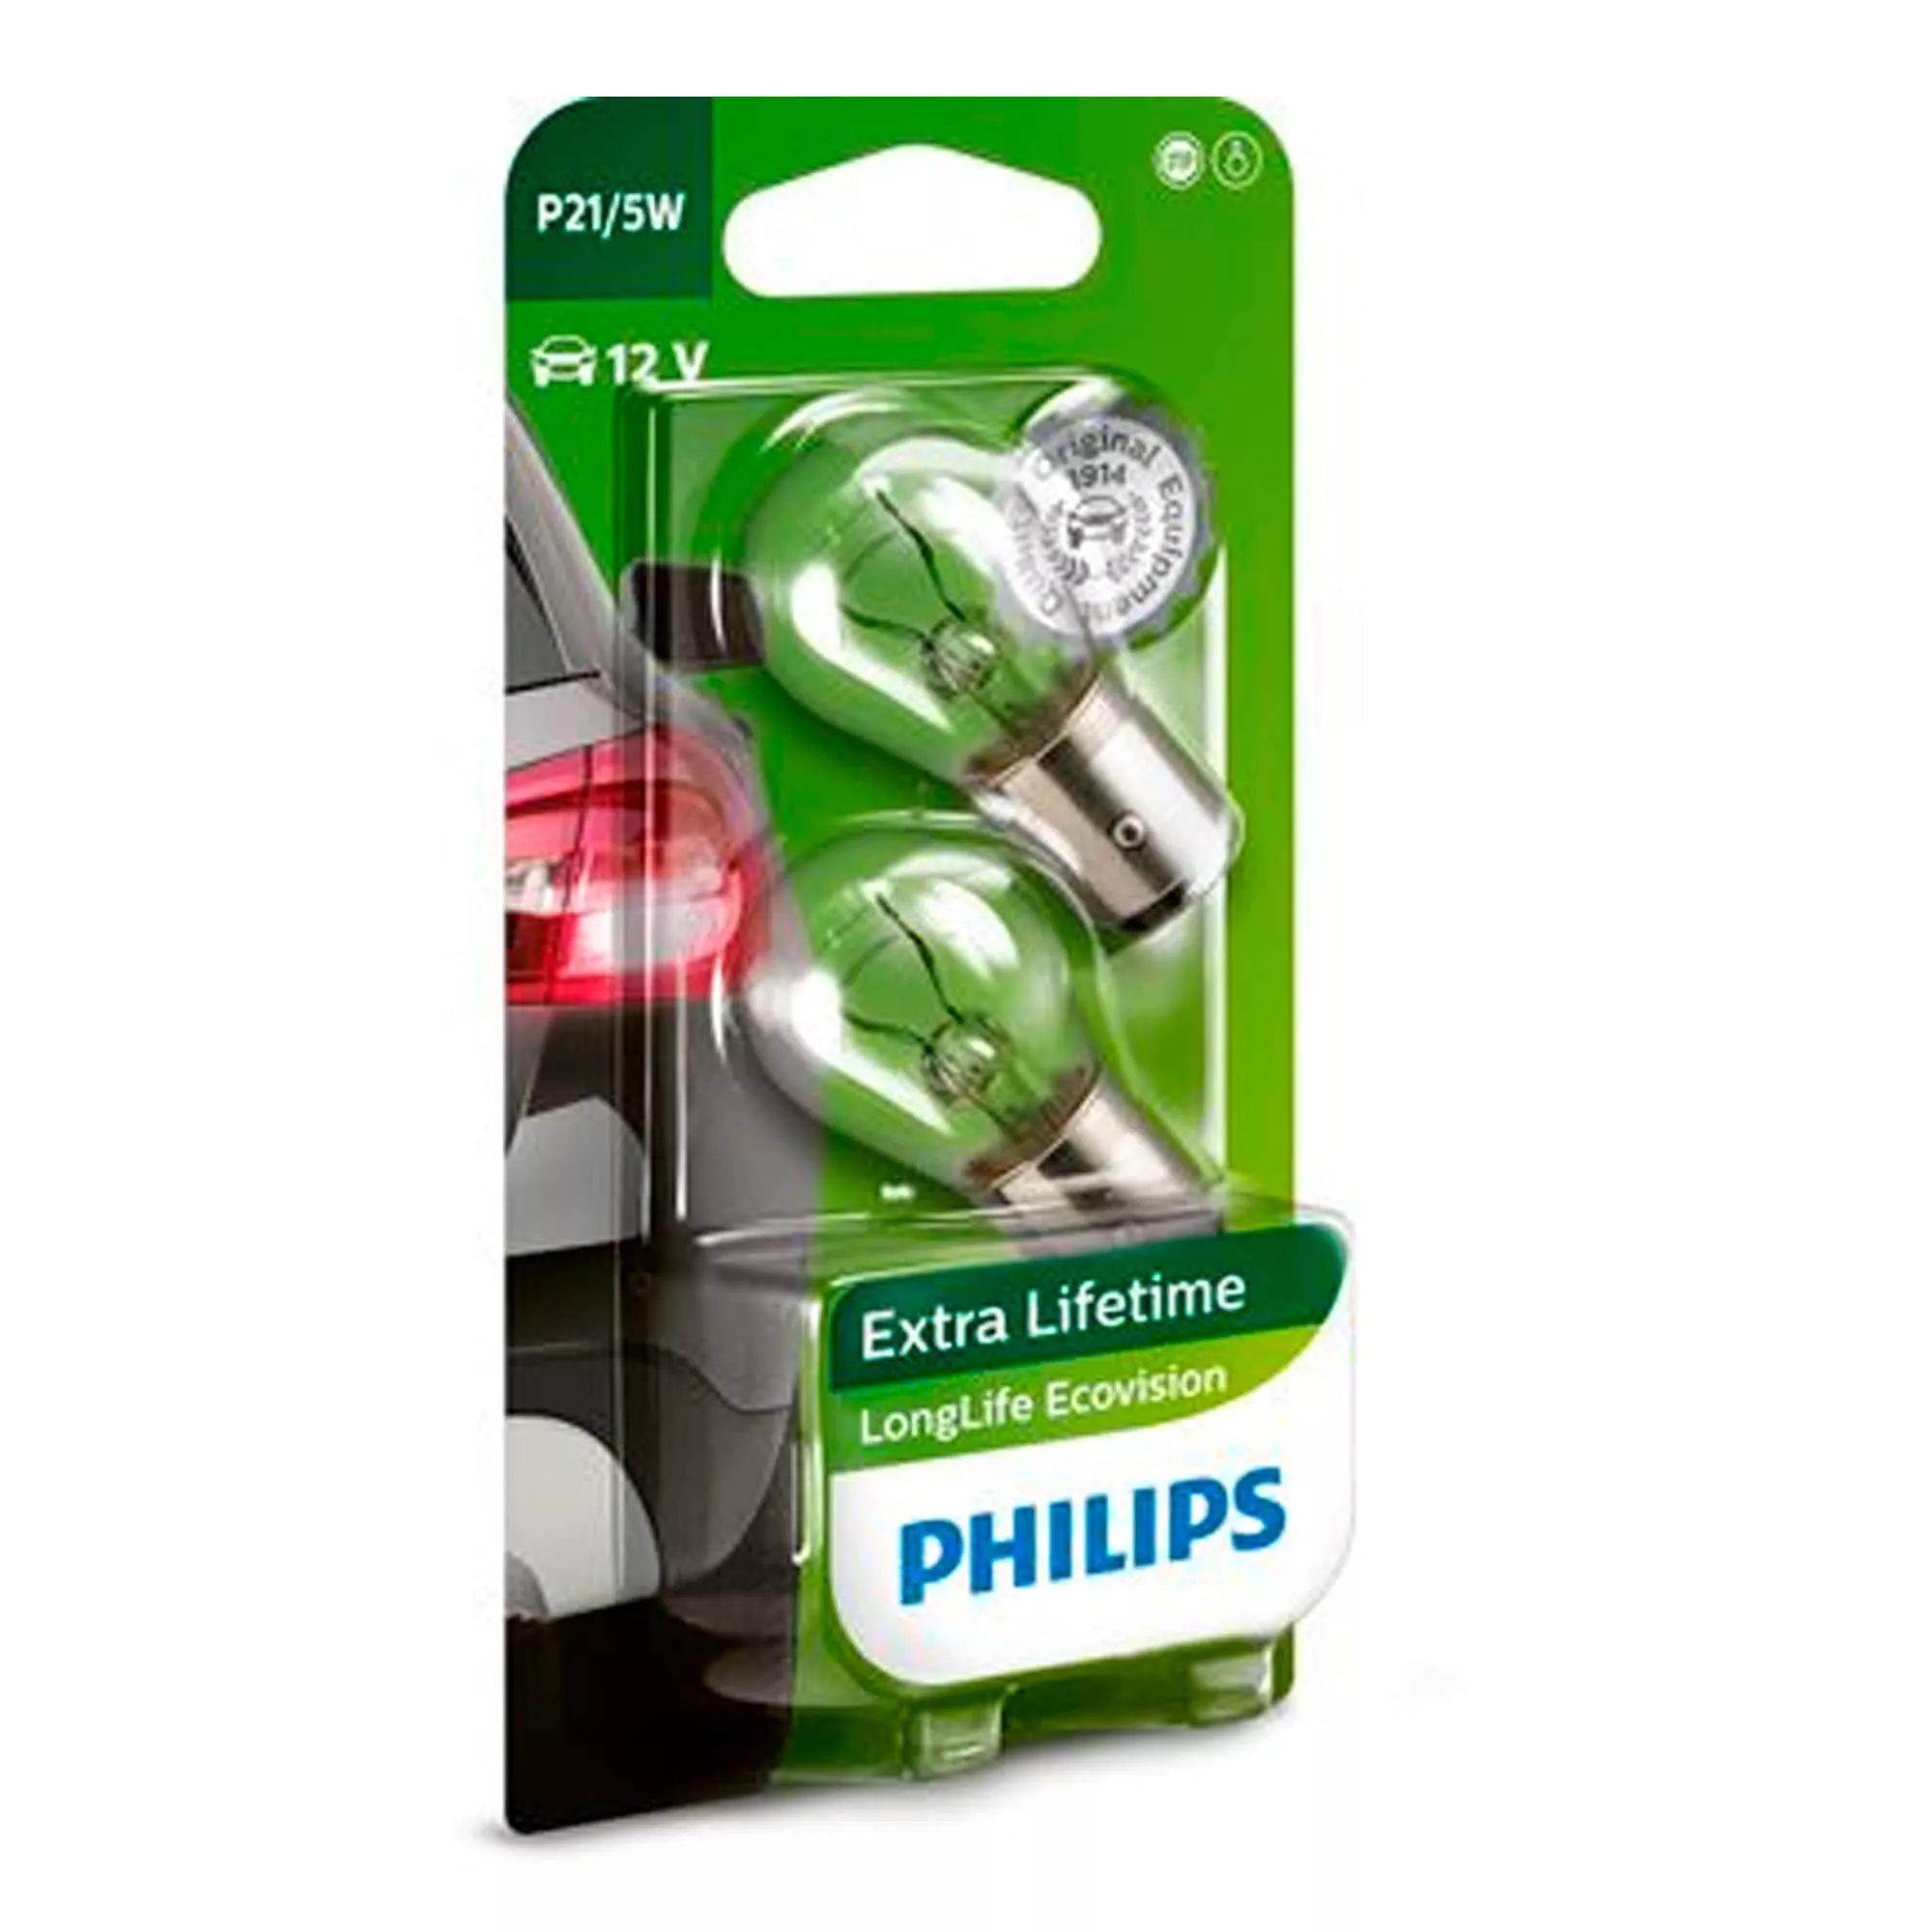 Лампа Philips LongLife EcoVision P21/5W 12V 5W 12499 LLECO B2